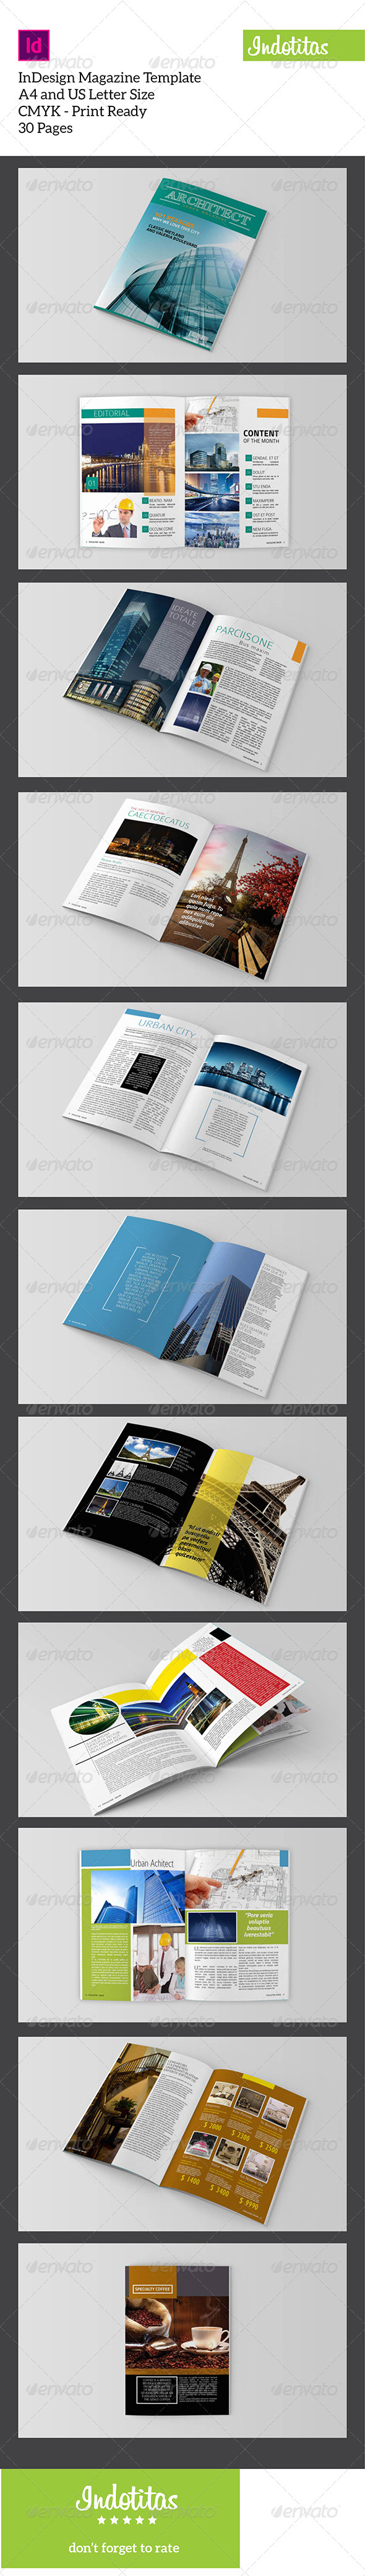 GraphicRiver InDesign Magazine Template 7680779